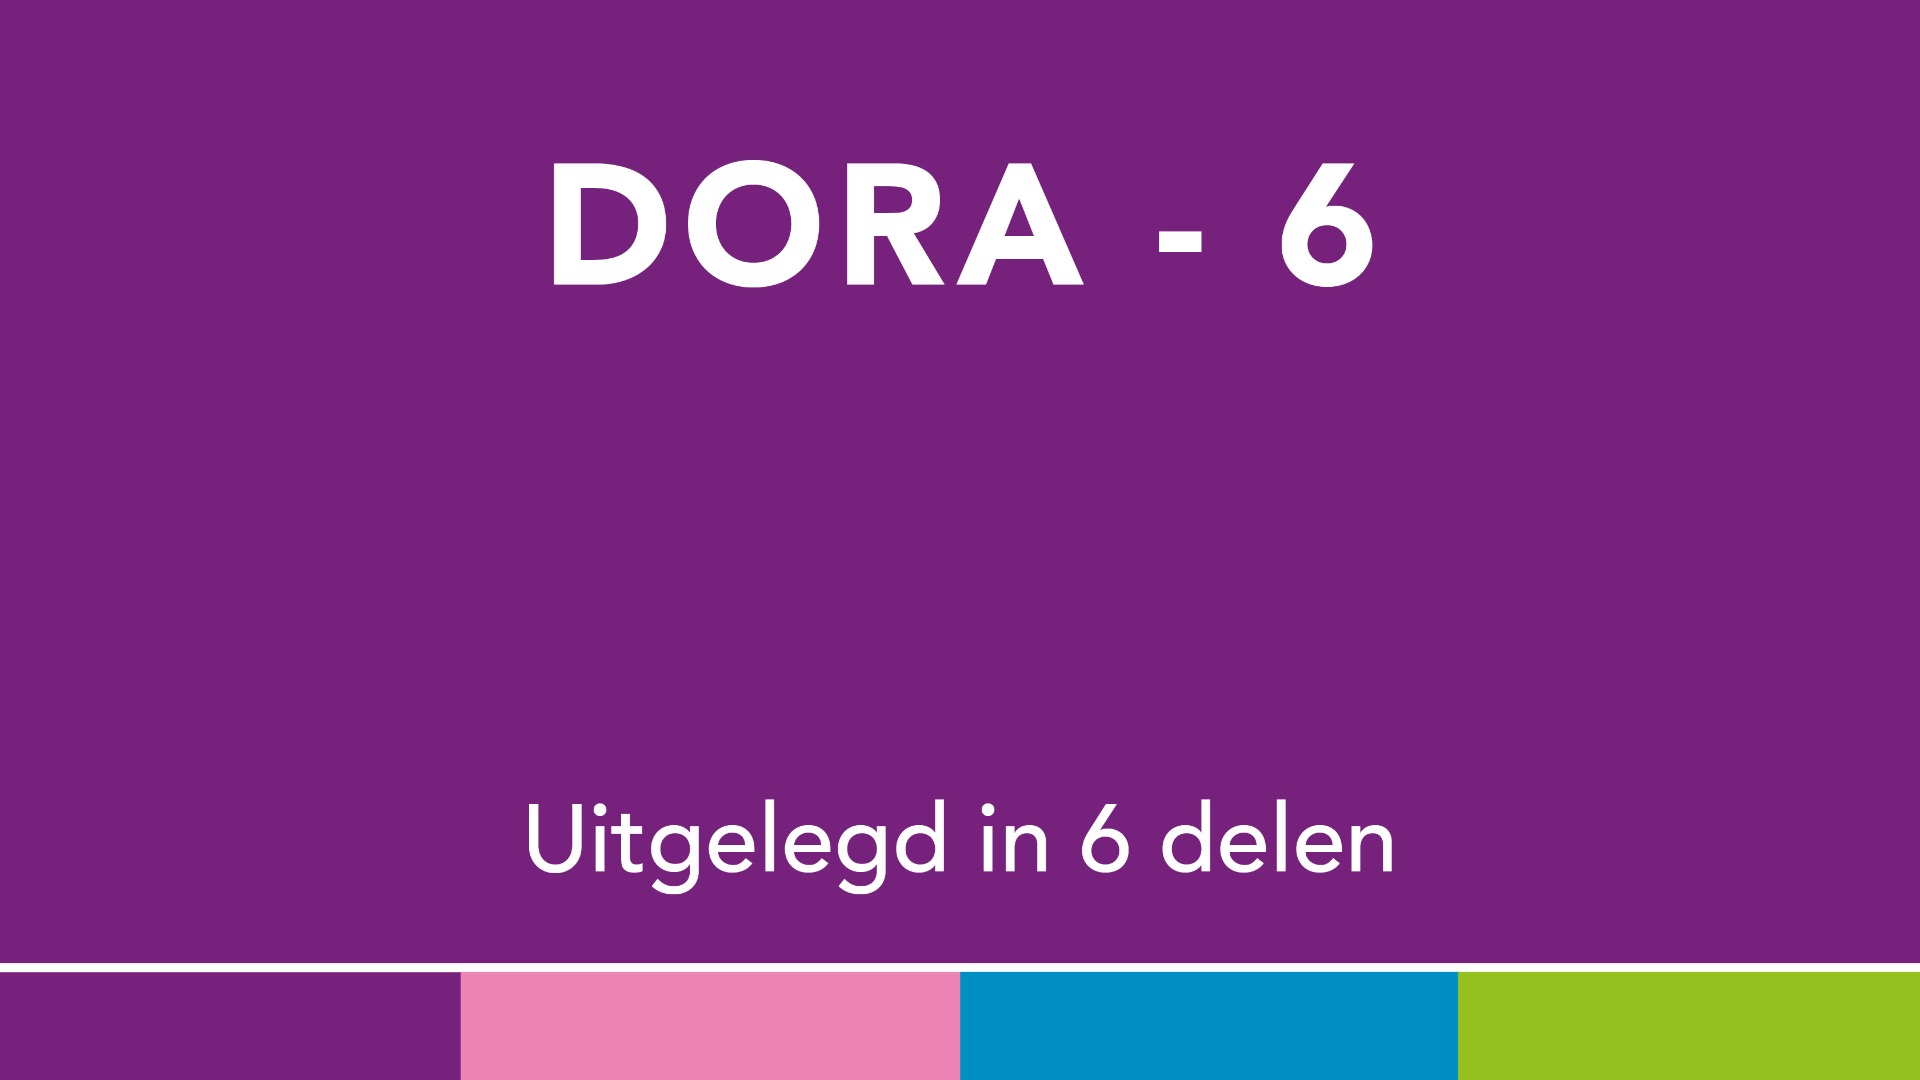 DORA - 6